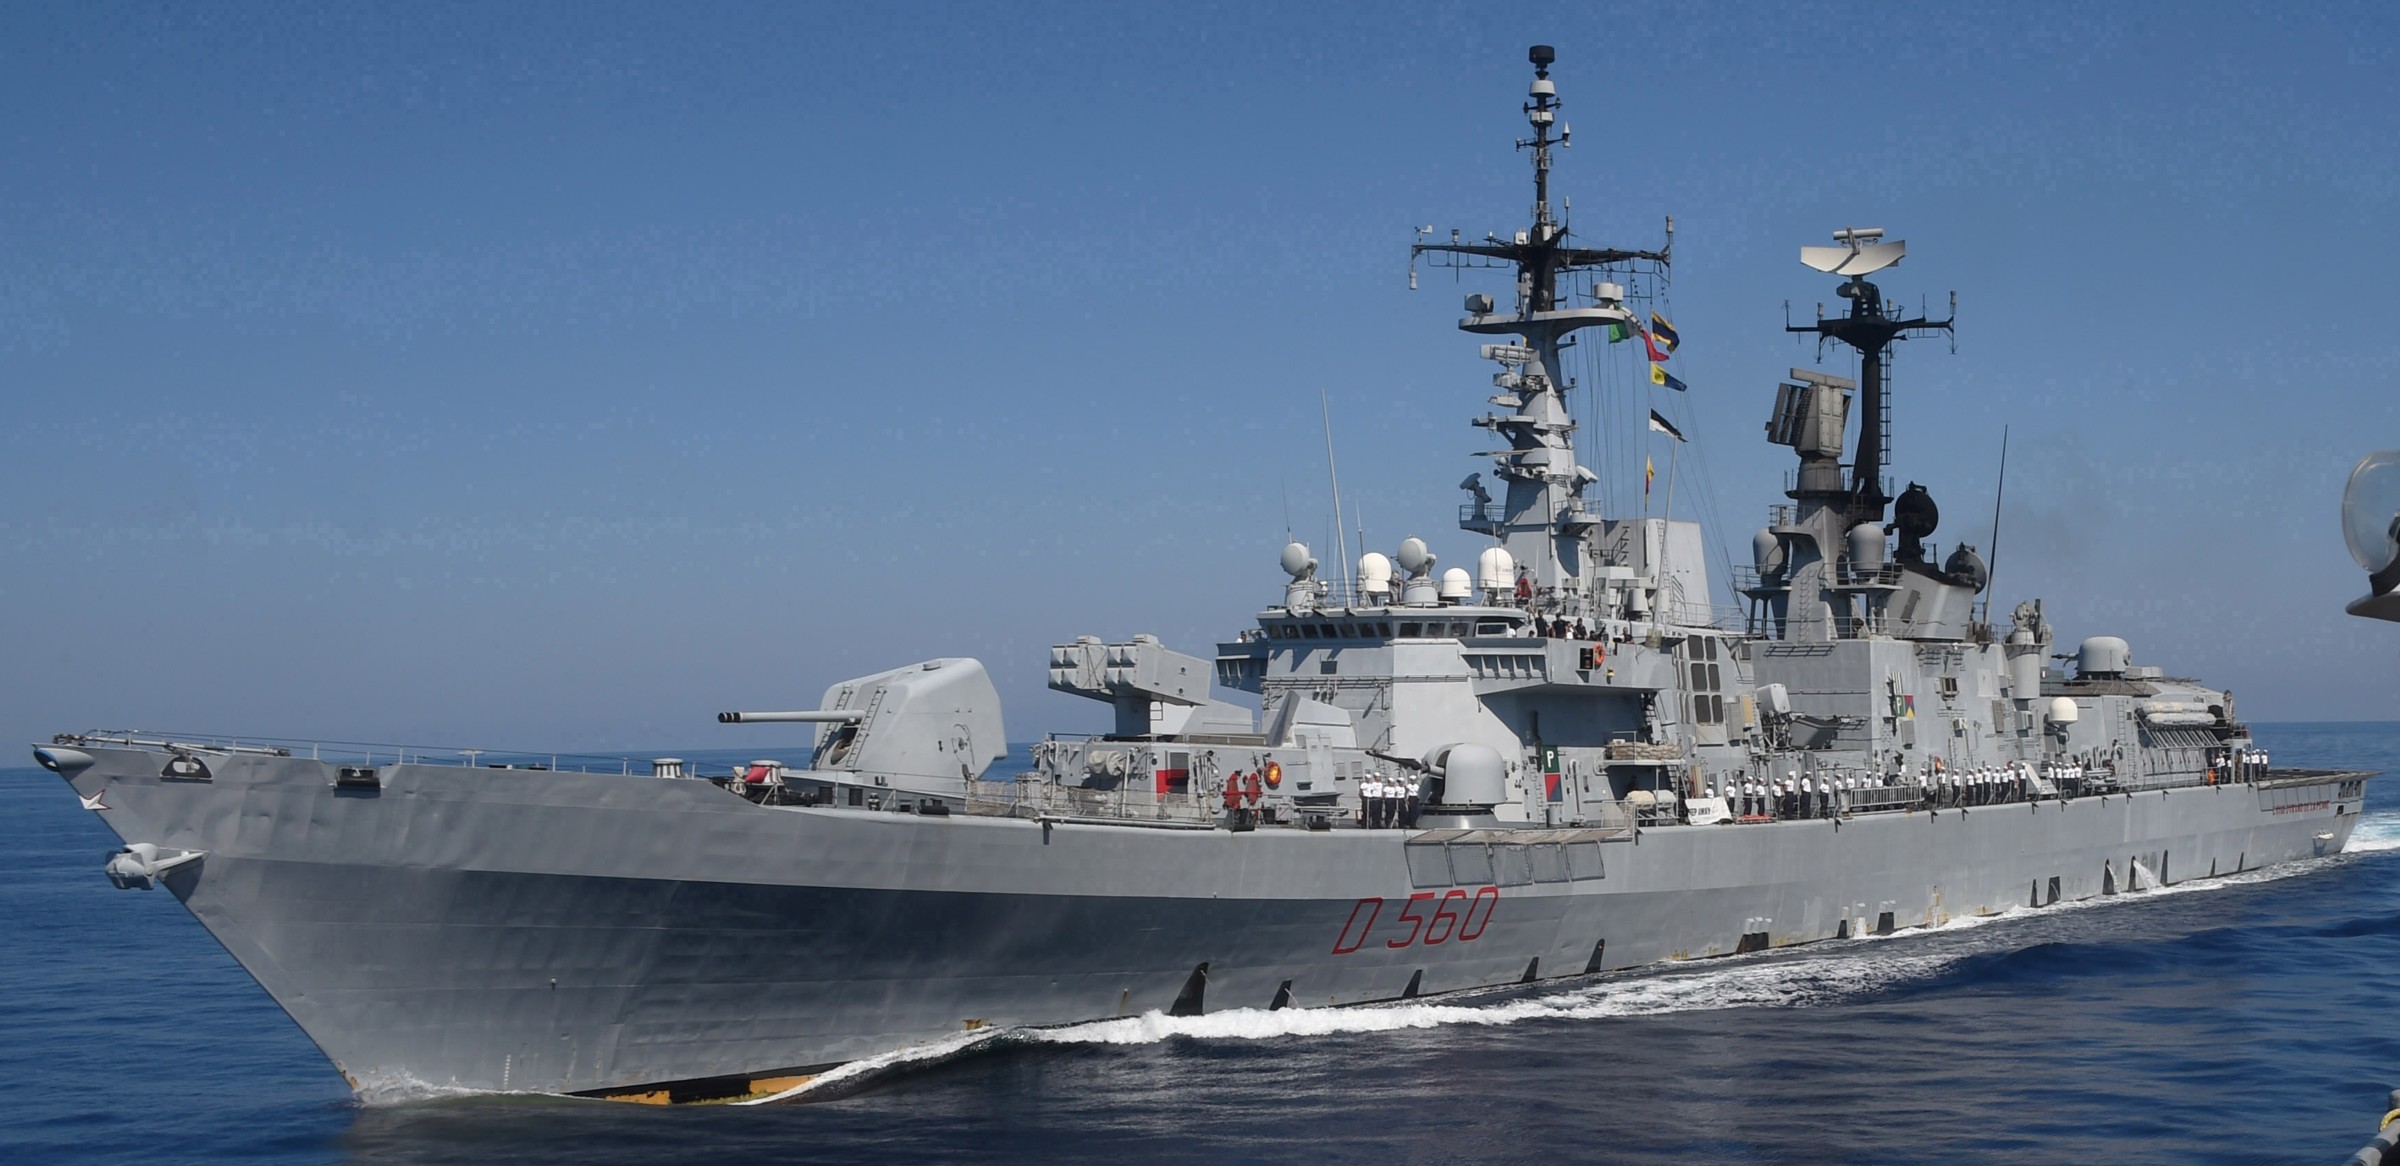 d-560 luigi durand de la penne its nave guided missile destroyer ddg italian navy marina militare 21x fincantieri riva trigoso